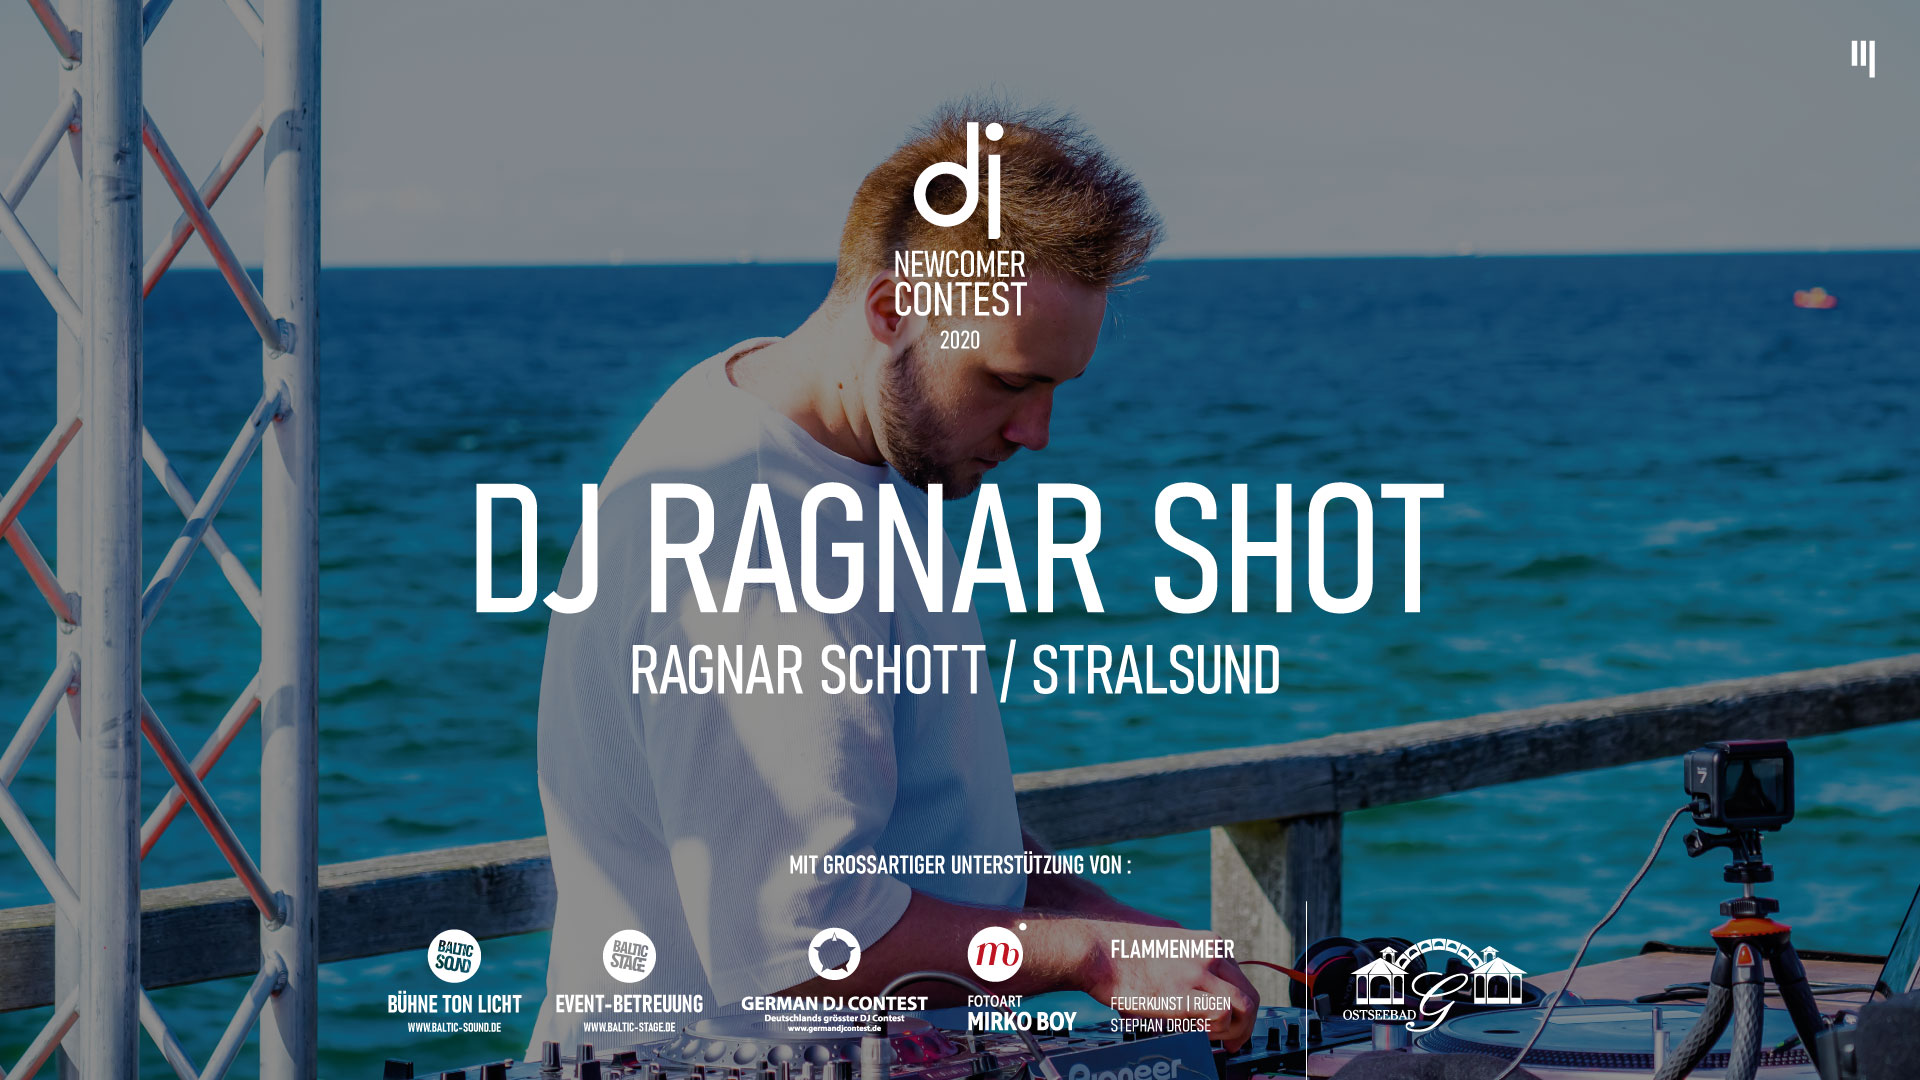 DJ RAGNAR SHOT